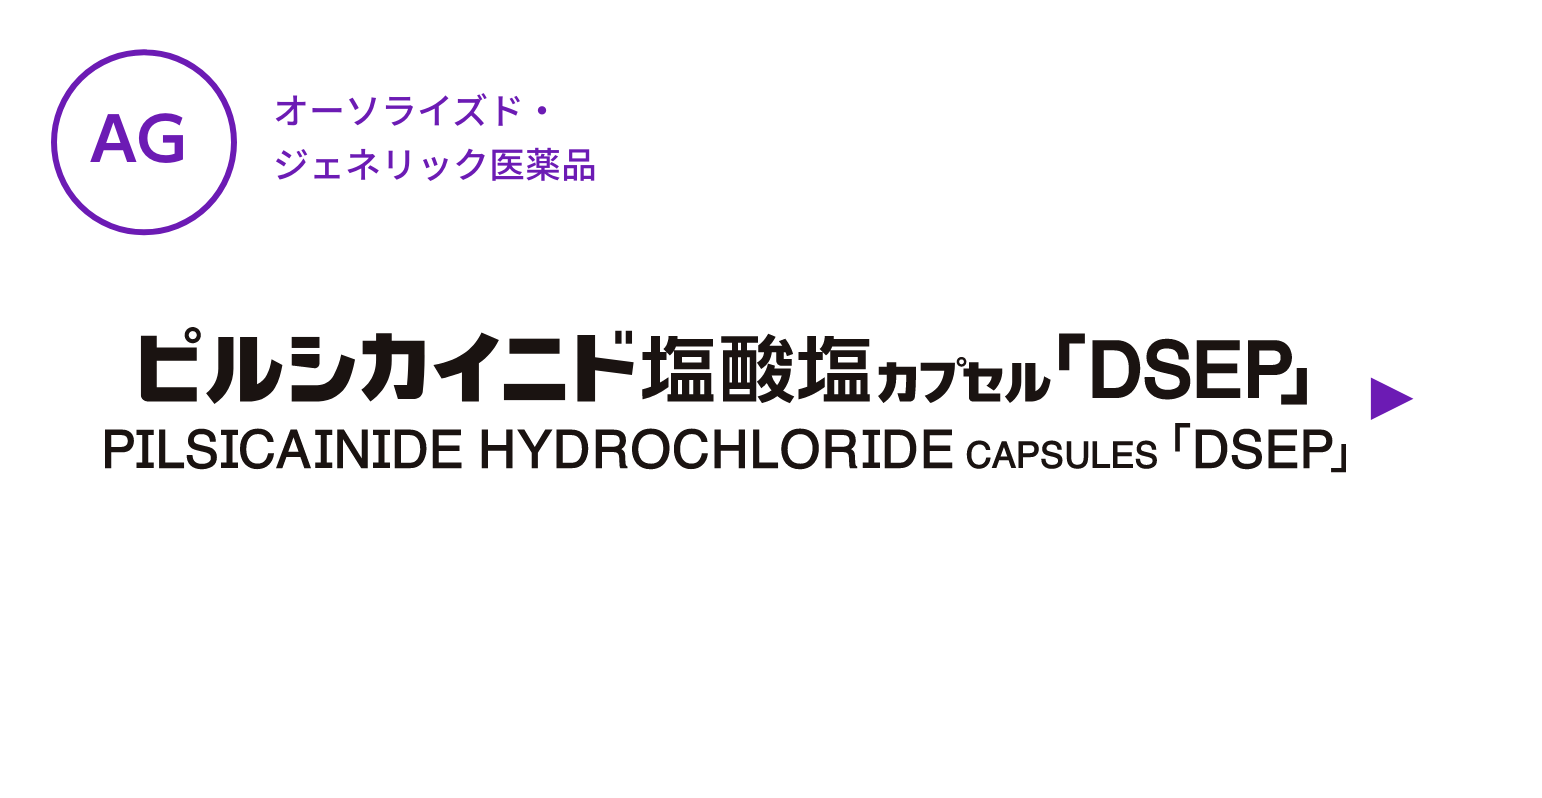 【AG】ピルシカイニド塩酸塩カプセル「DSEP」